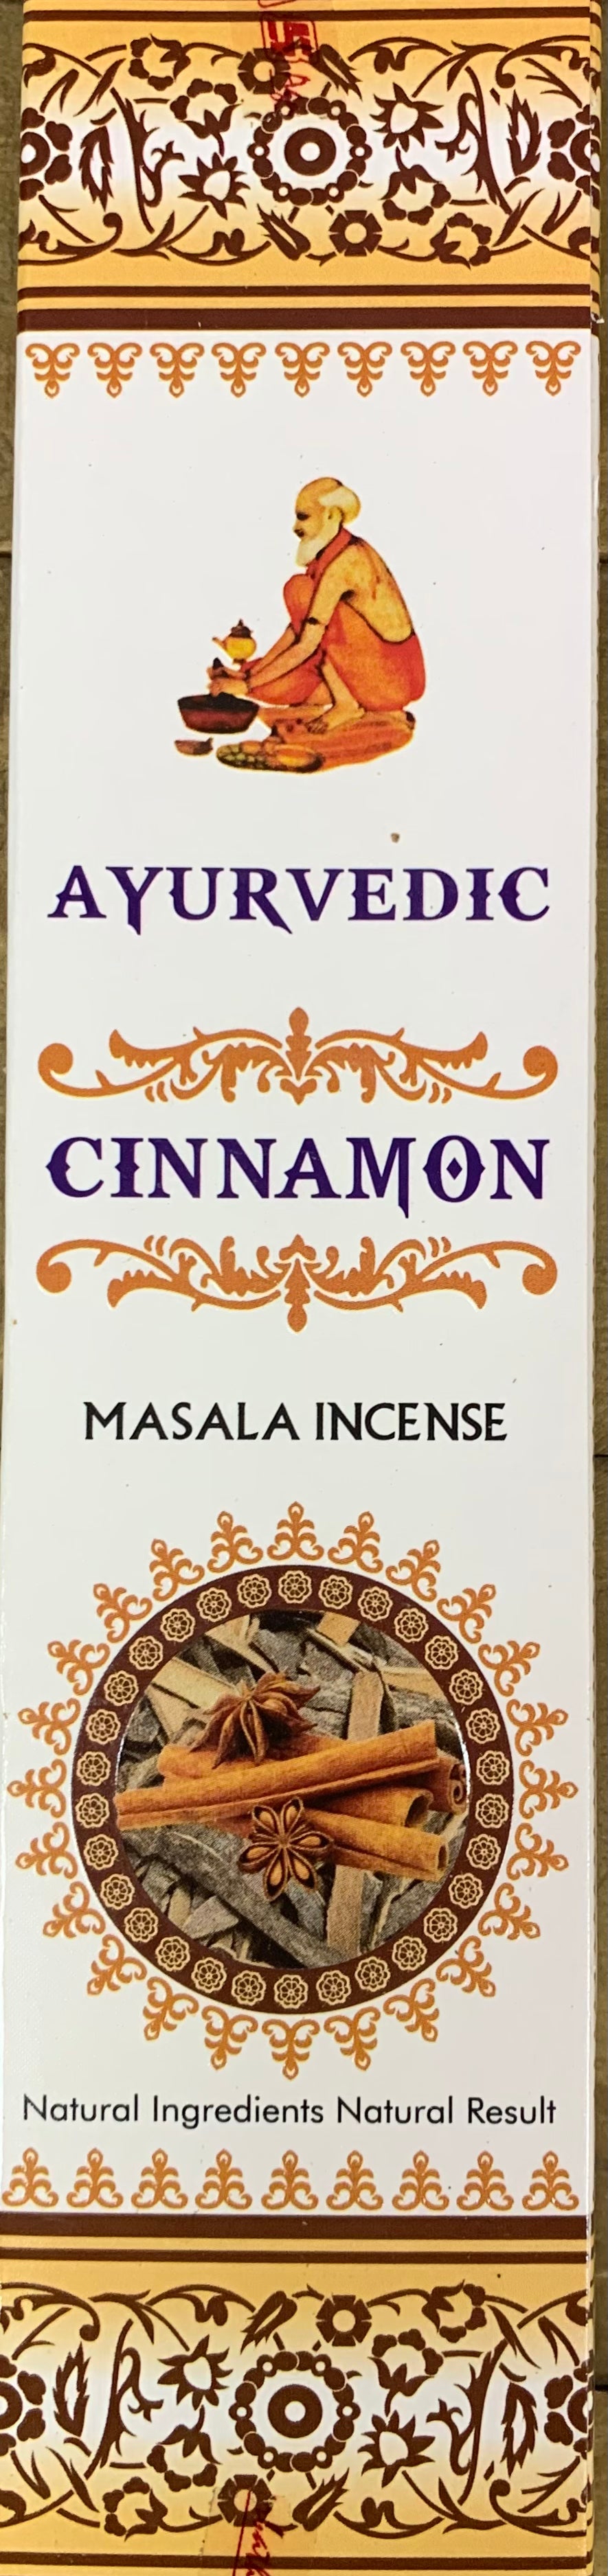 Incense Ayurvedic/Cinnamon